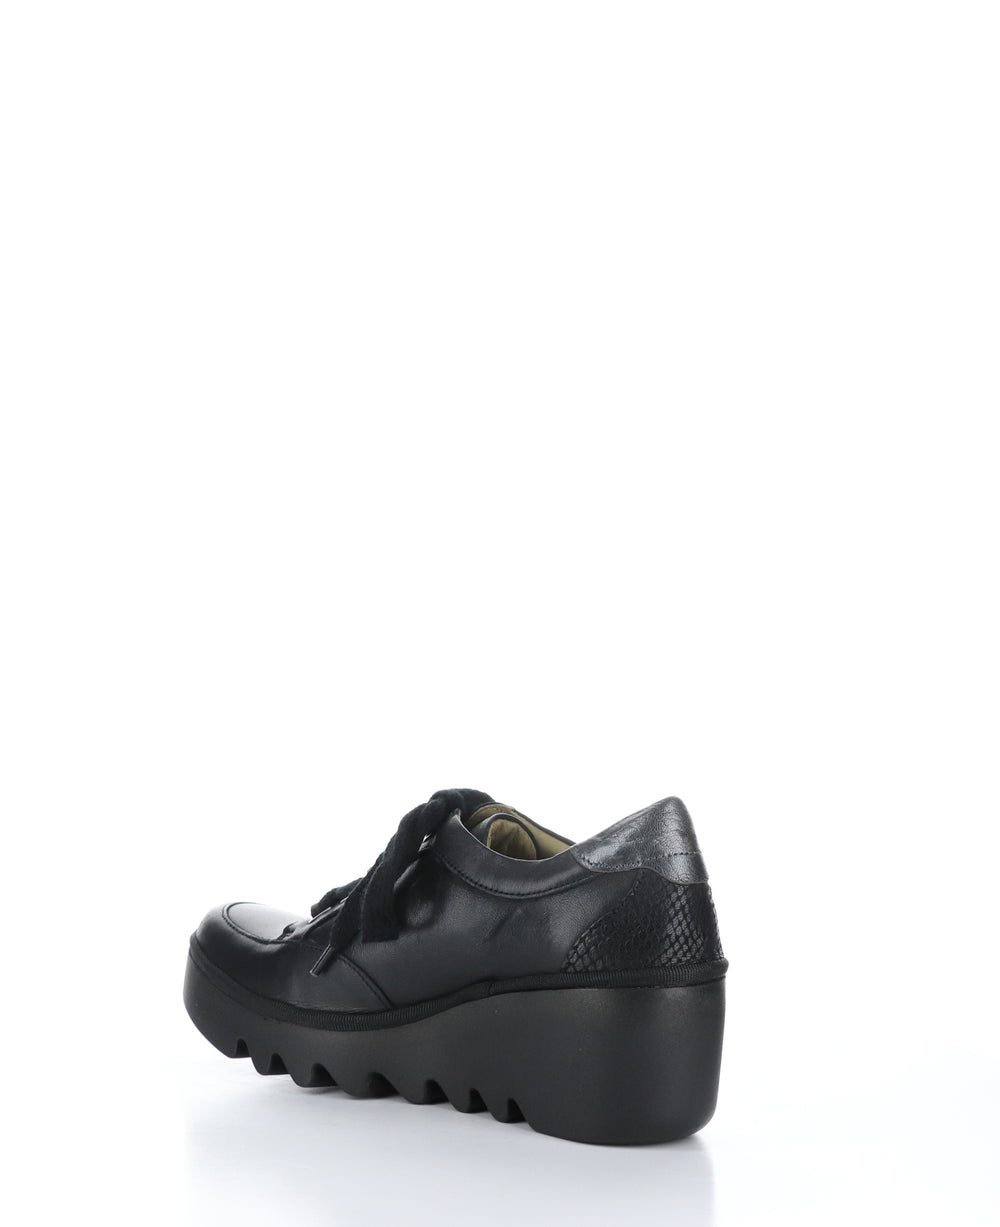 BINO347FLY Black/Graphite Round Toe Shoes